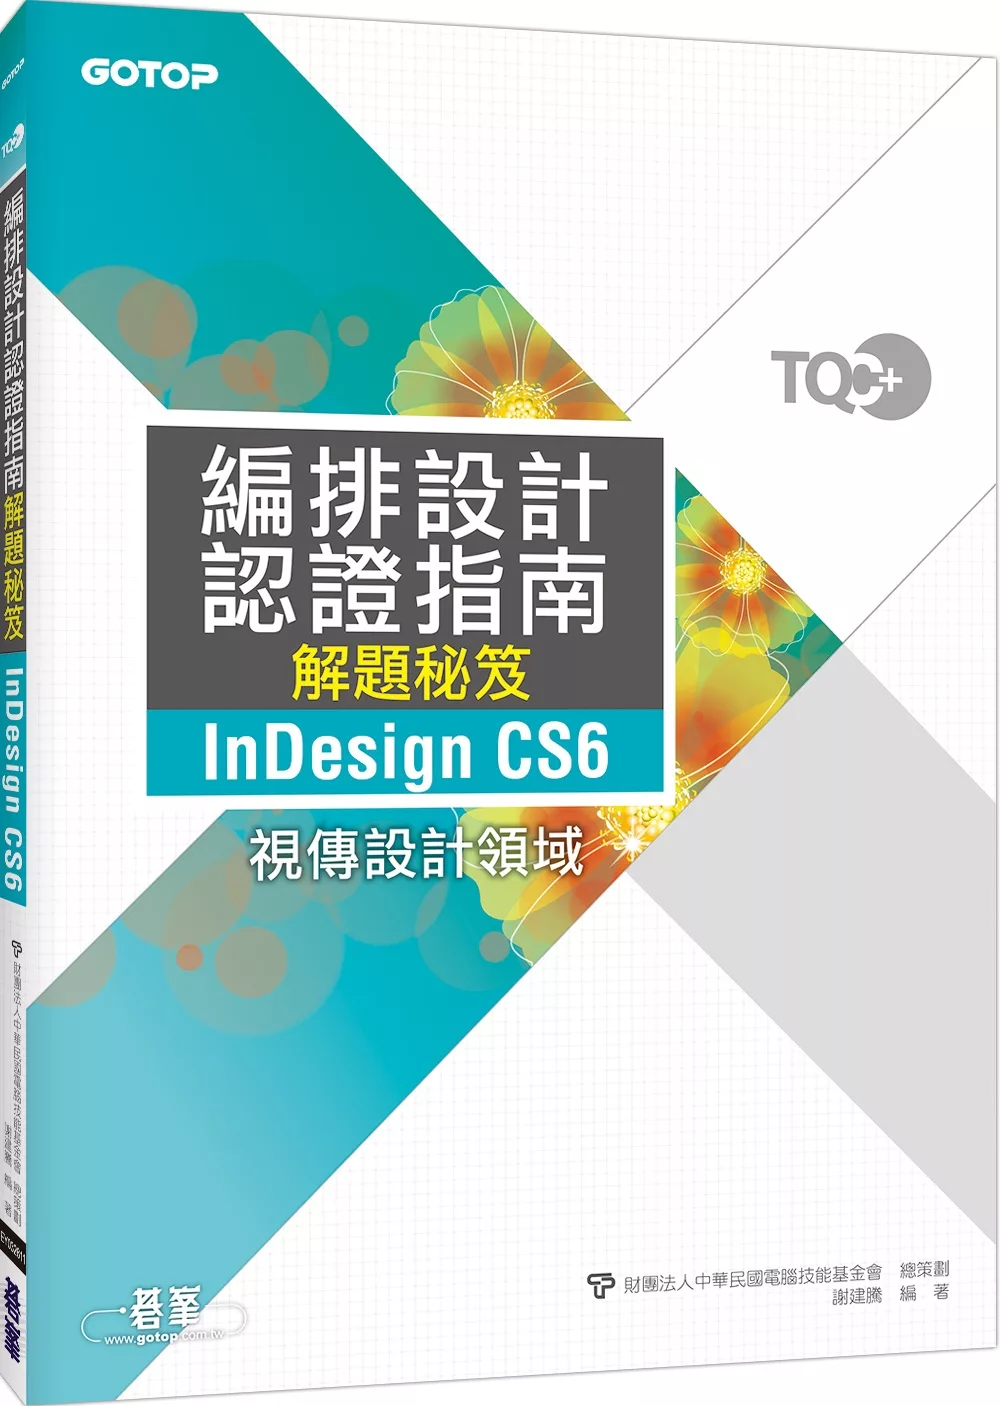 TQC+編排設計認證指南解題秘笈 InDesign CS6